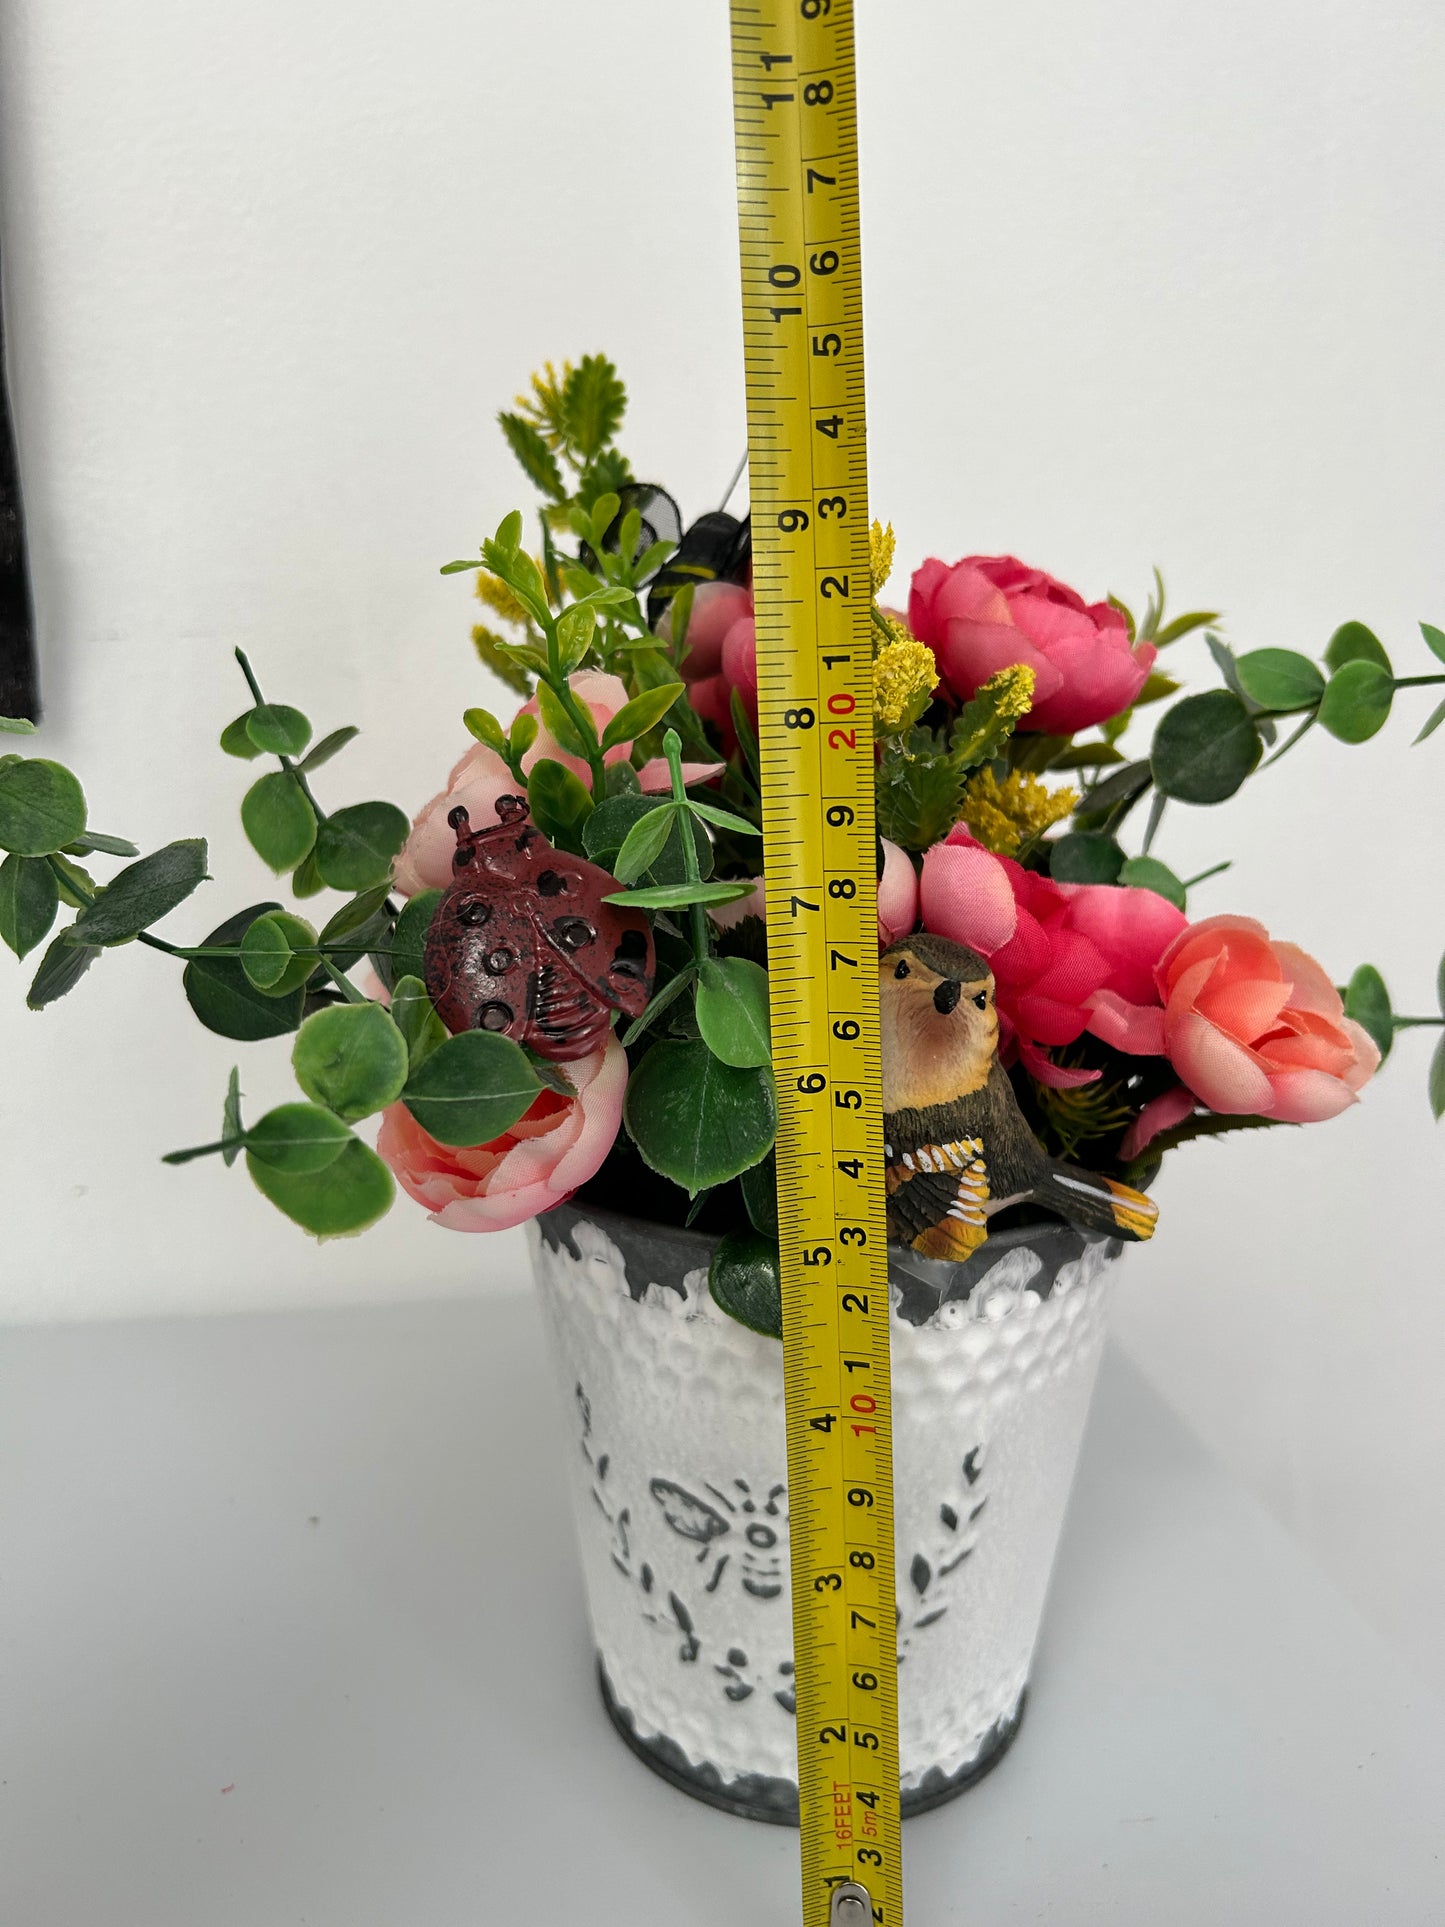 Rose Artificial Flower Tin Can